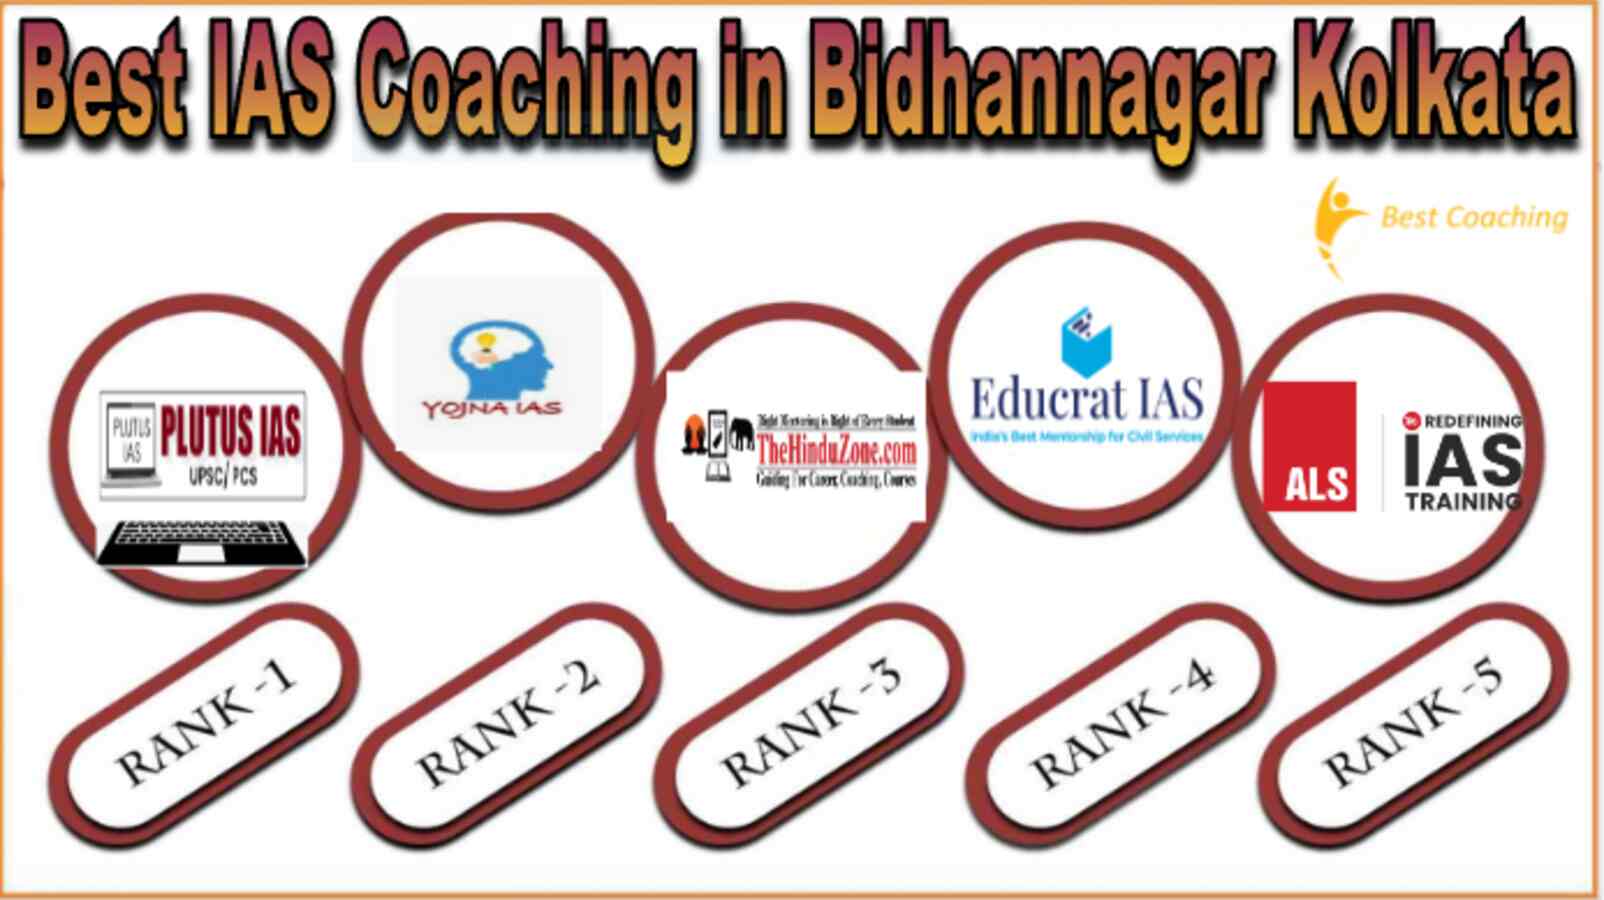 Best IAS coaching in Bidhannagar Kolkata